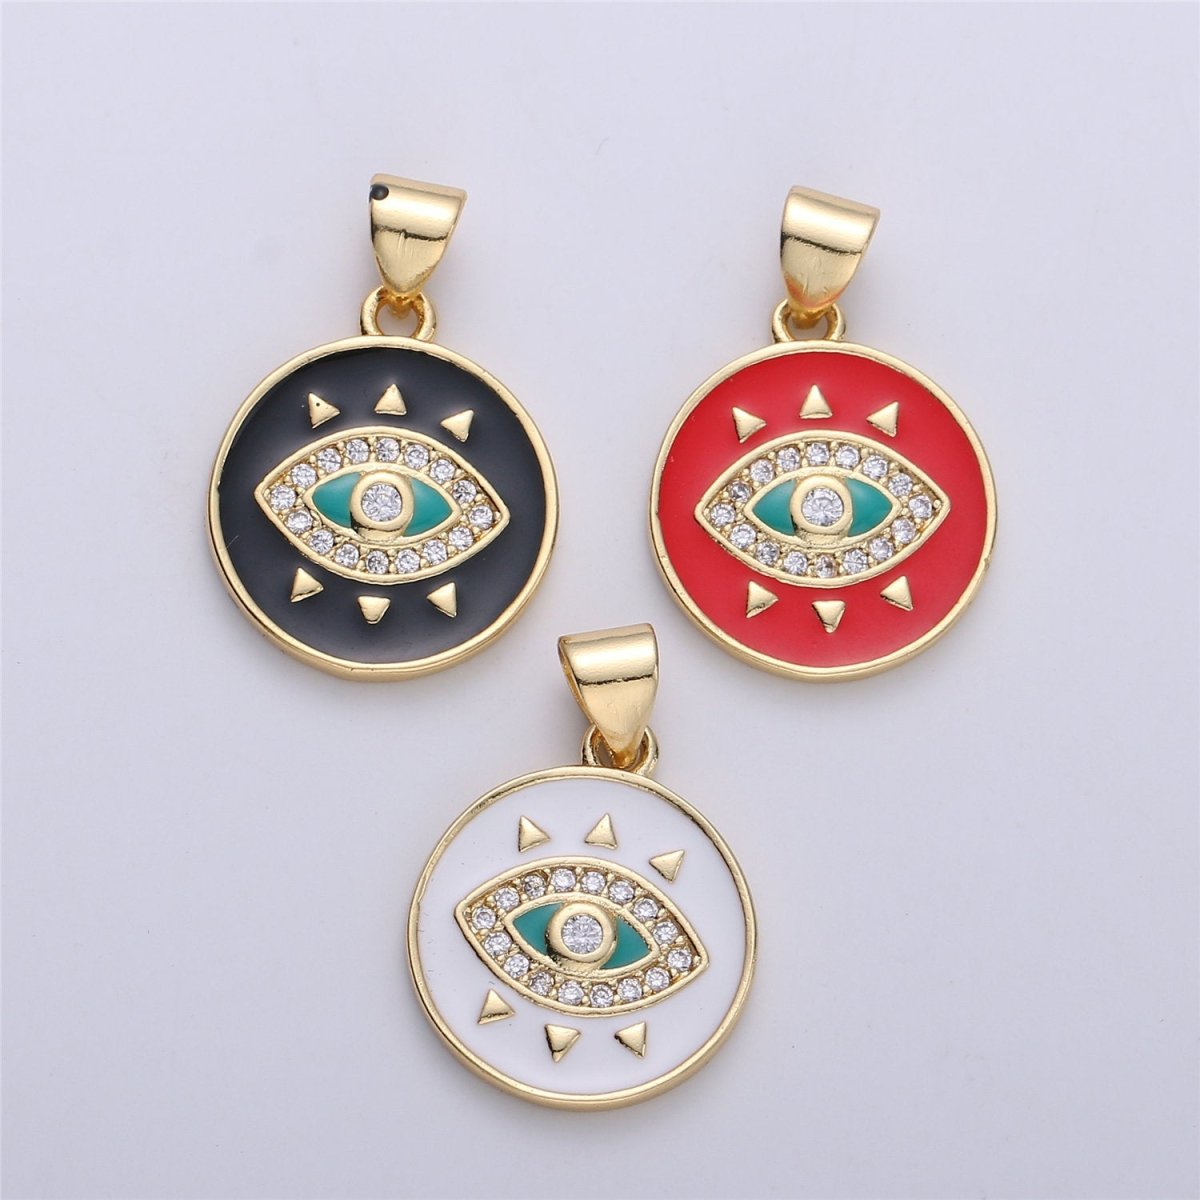 Enamel Evil Eye Charm, Red Blue White eye pendant, Enamel eye Pendant, Protection eye charm Coin Medallion Pendant 21x15mm I-174 - DLUXCA